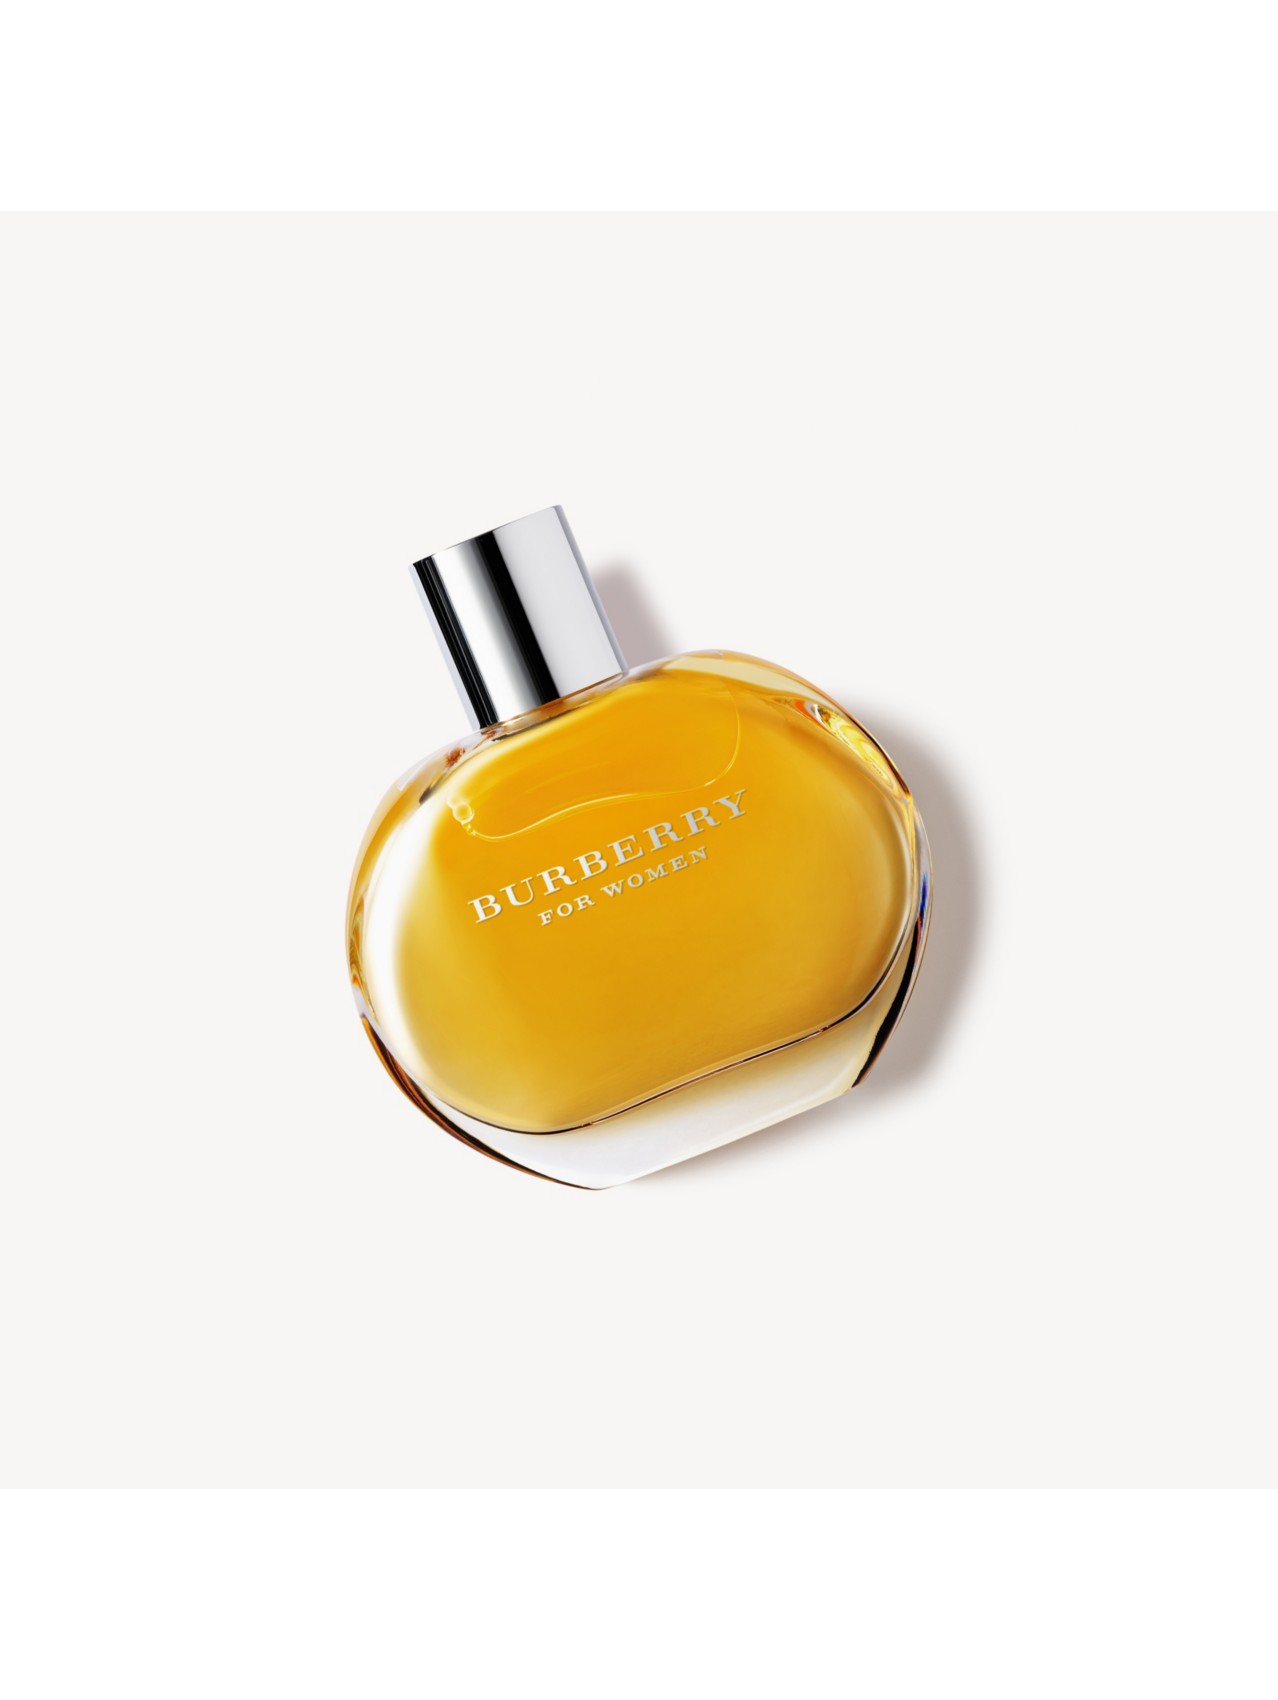 Burberry London Eau de Parfum 100ml - Women | Burberry® Official